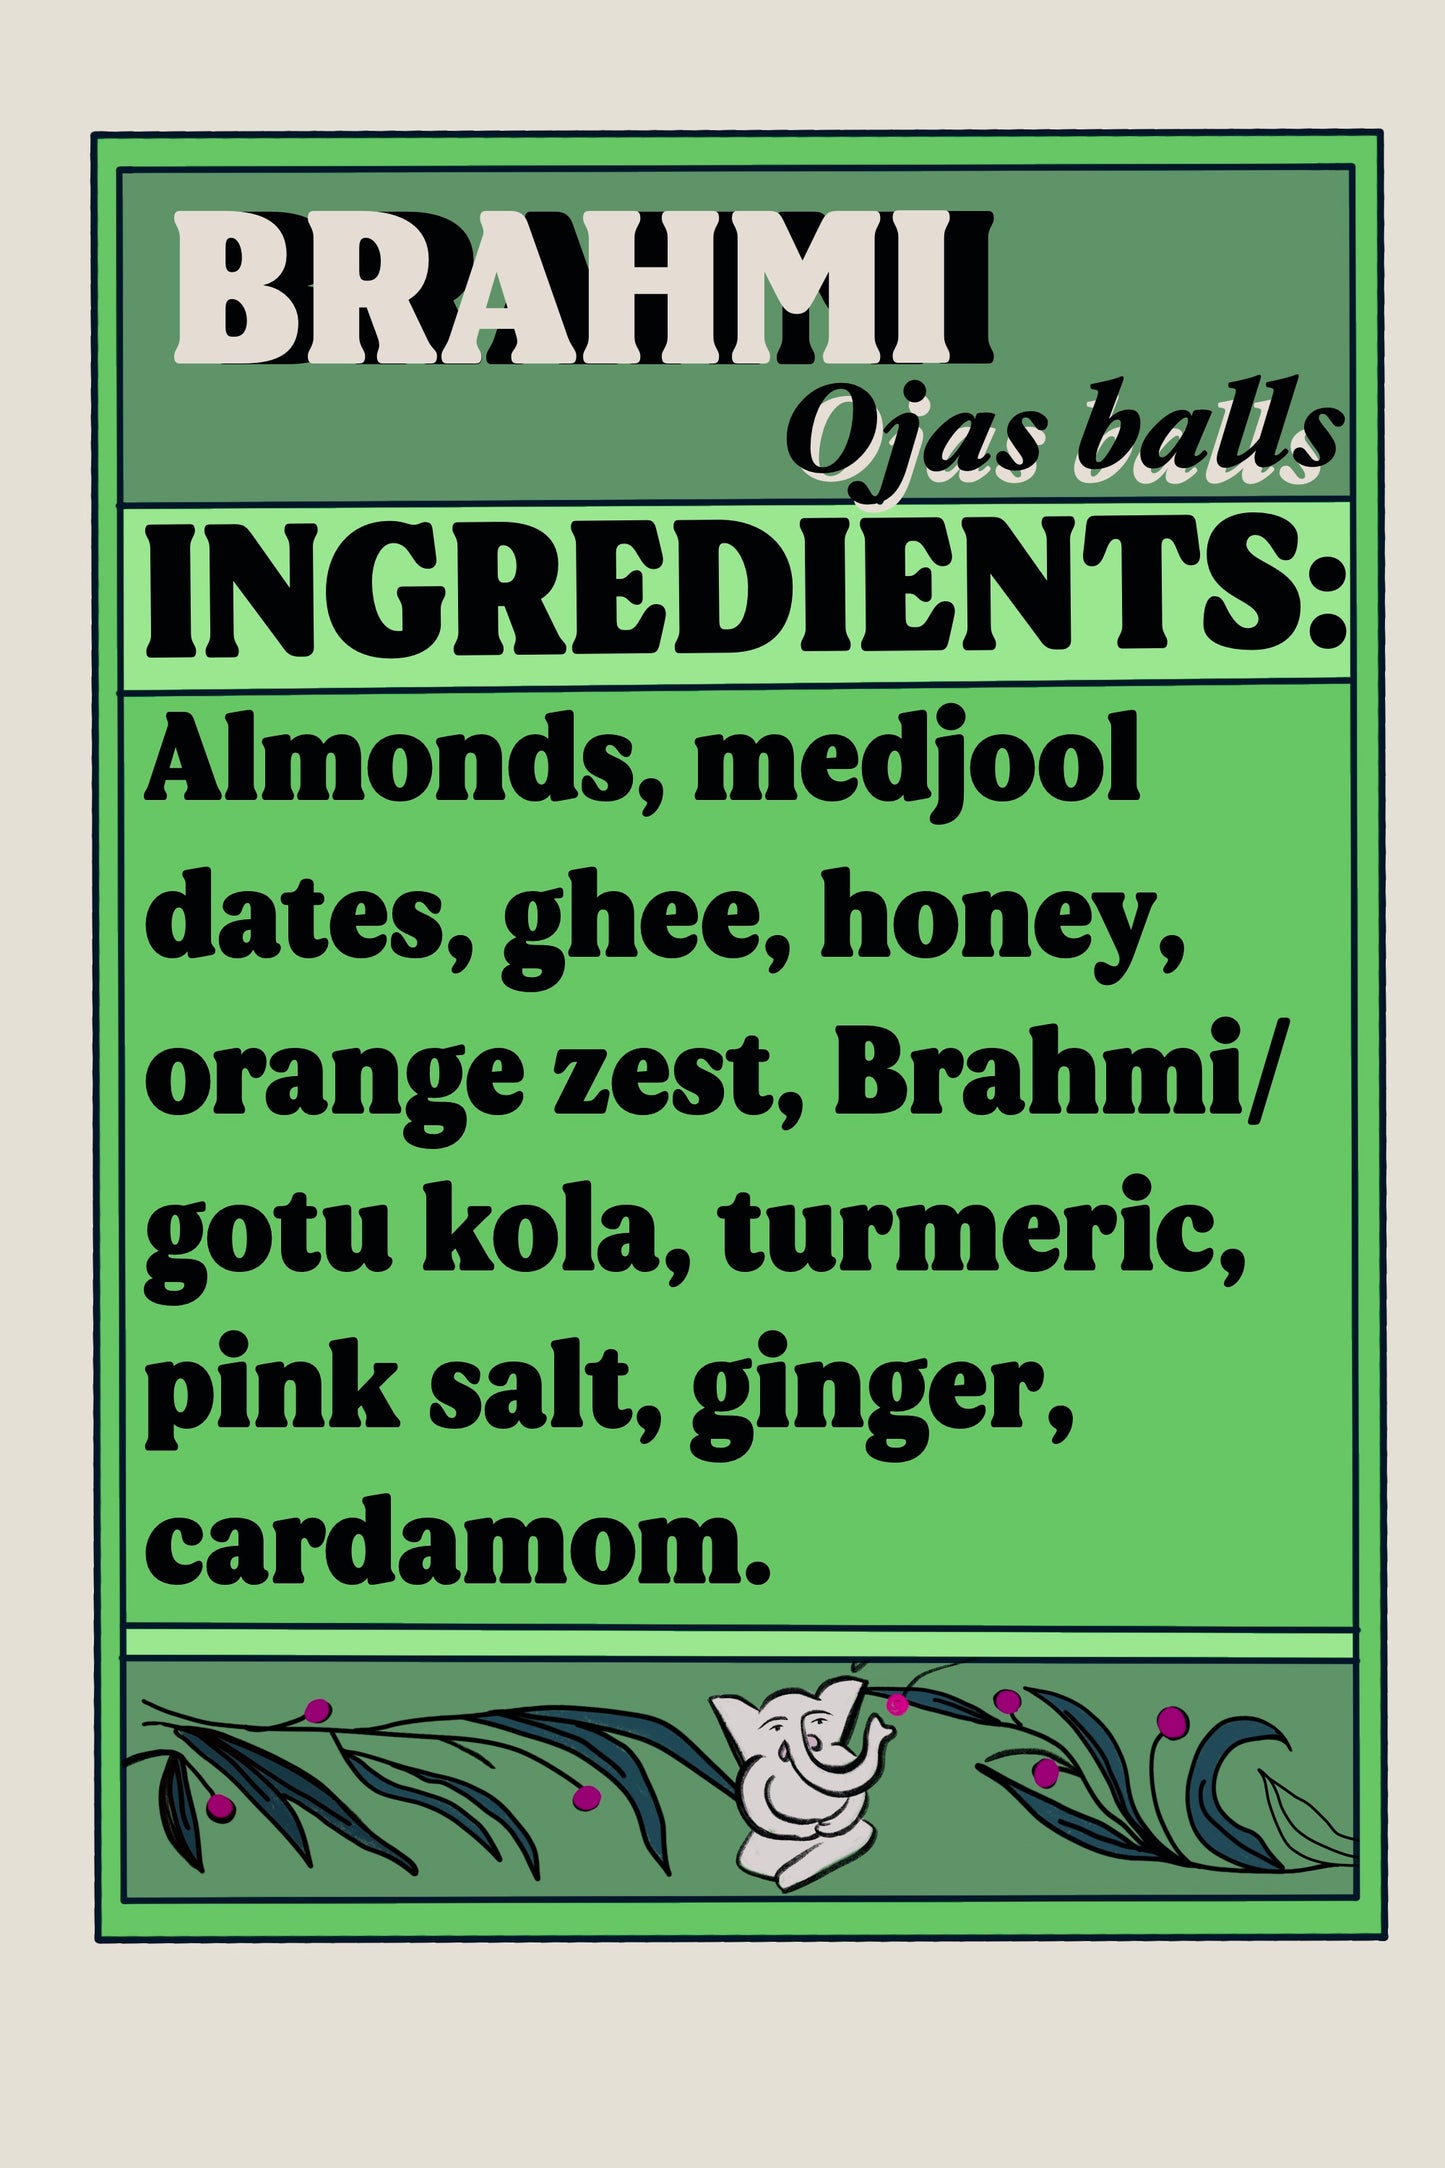 Brahmi Laddoos ingredients: almonds, medjool dates, ghee, honey, orange zest, Brahmi/gotu kola, turmeric, pink salt, ginger, cardamom.